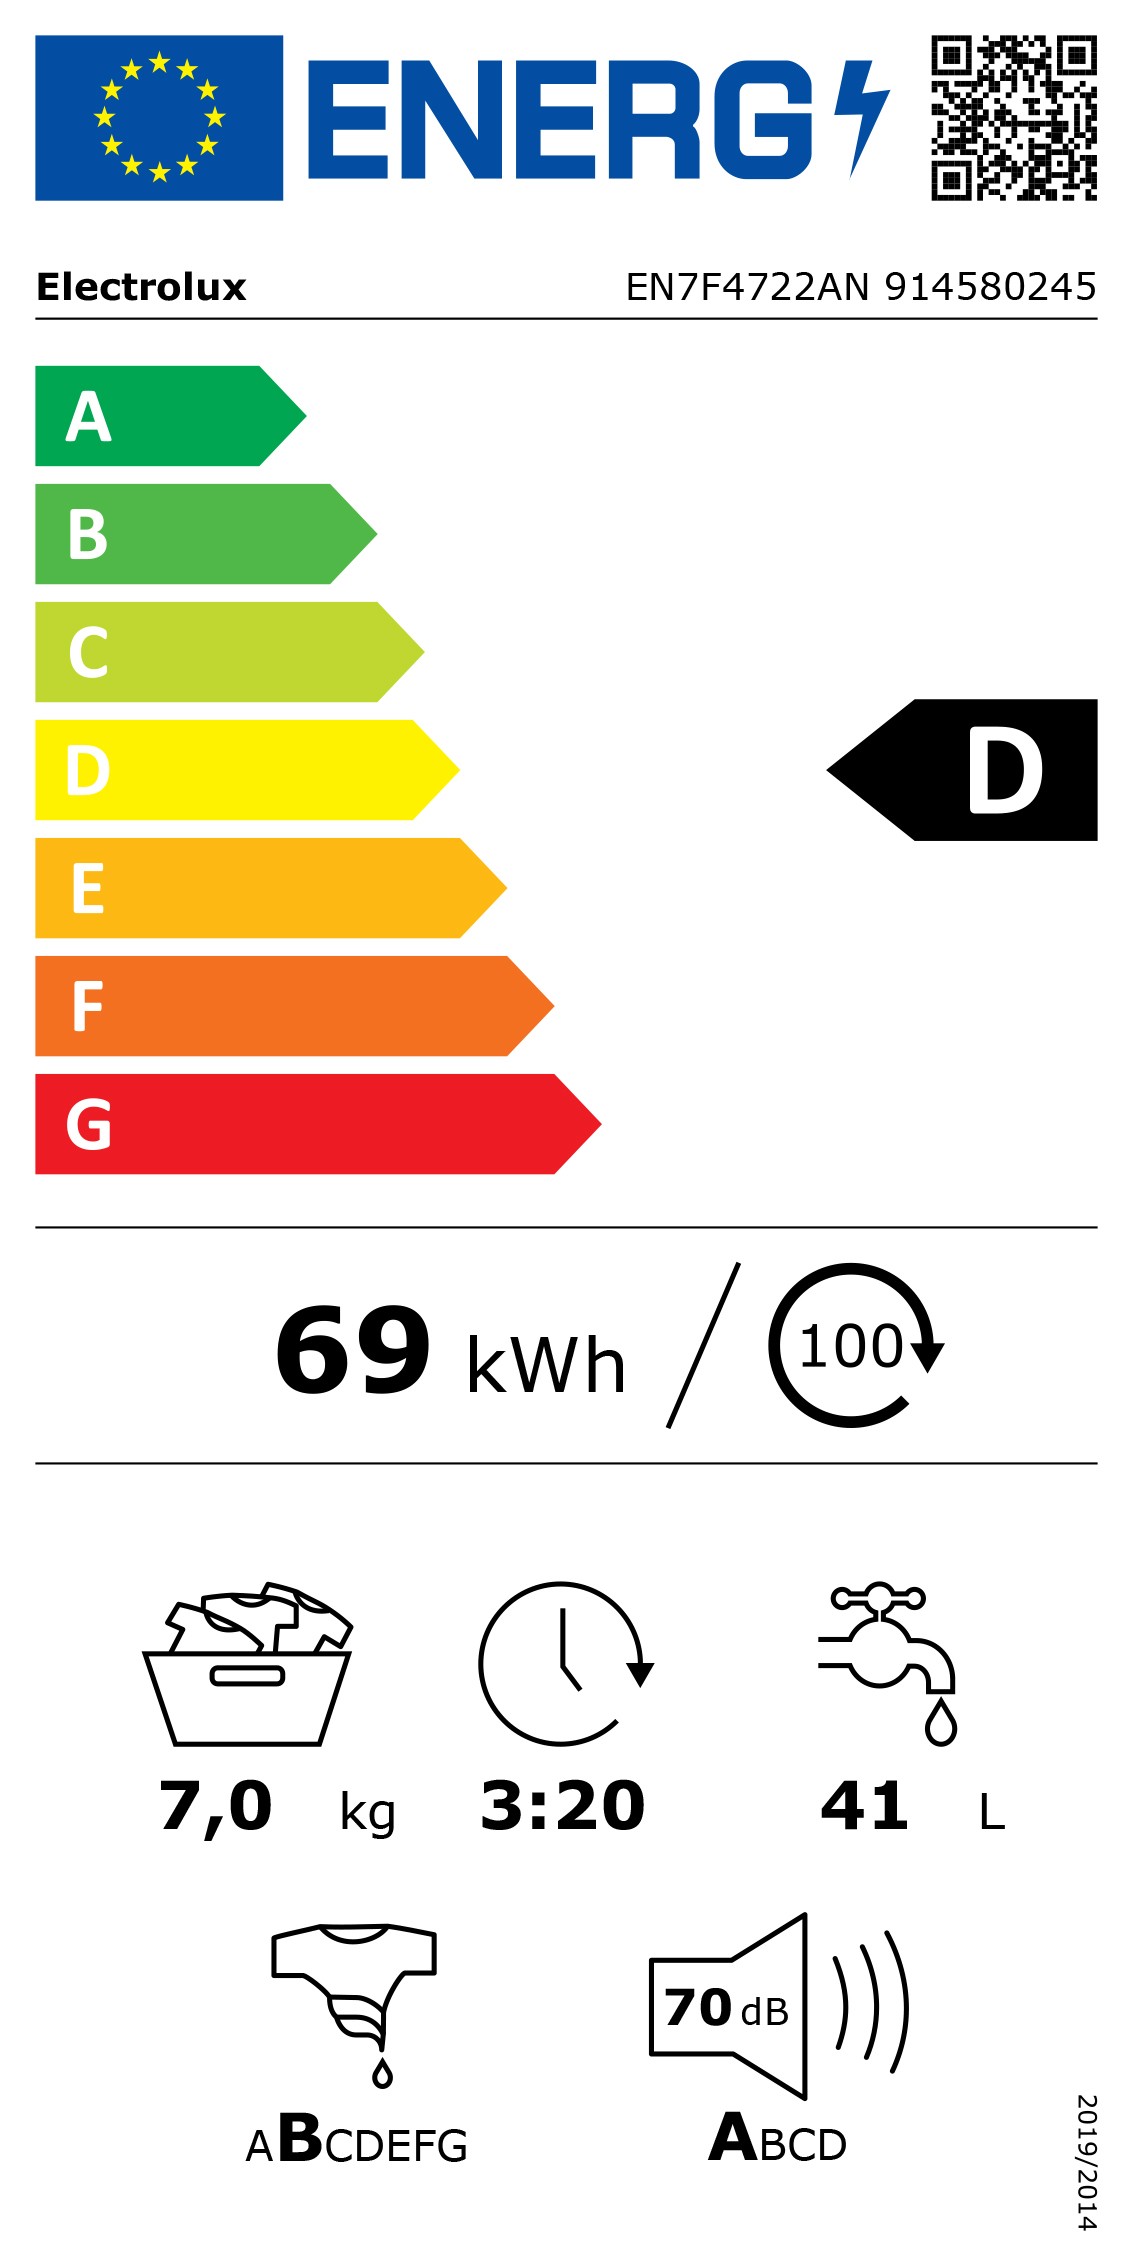 Etiqueta de Eficiencia Energética - 914580245